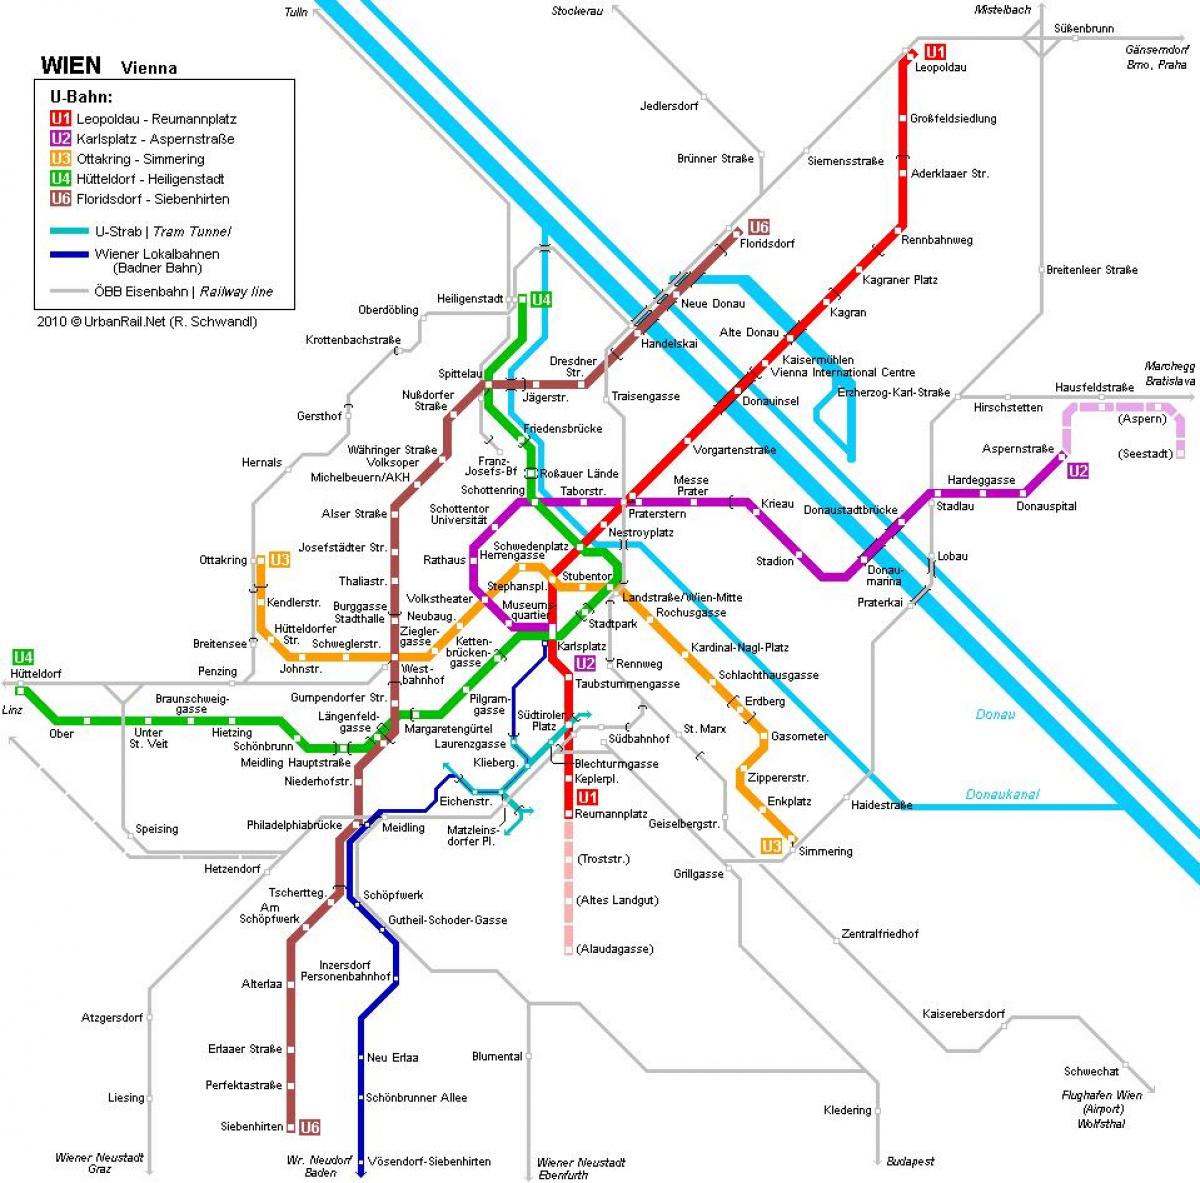 Beču metro mapu.